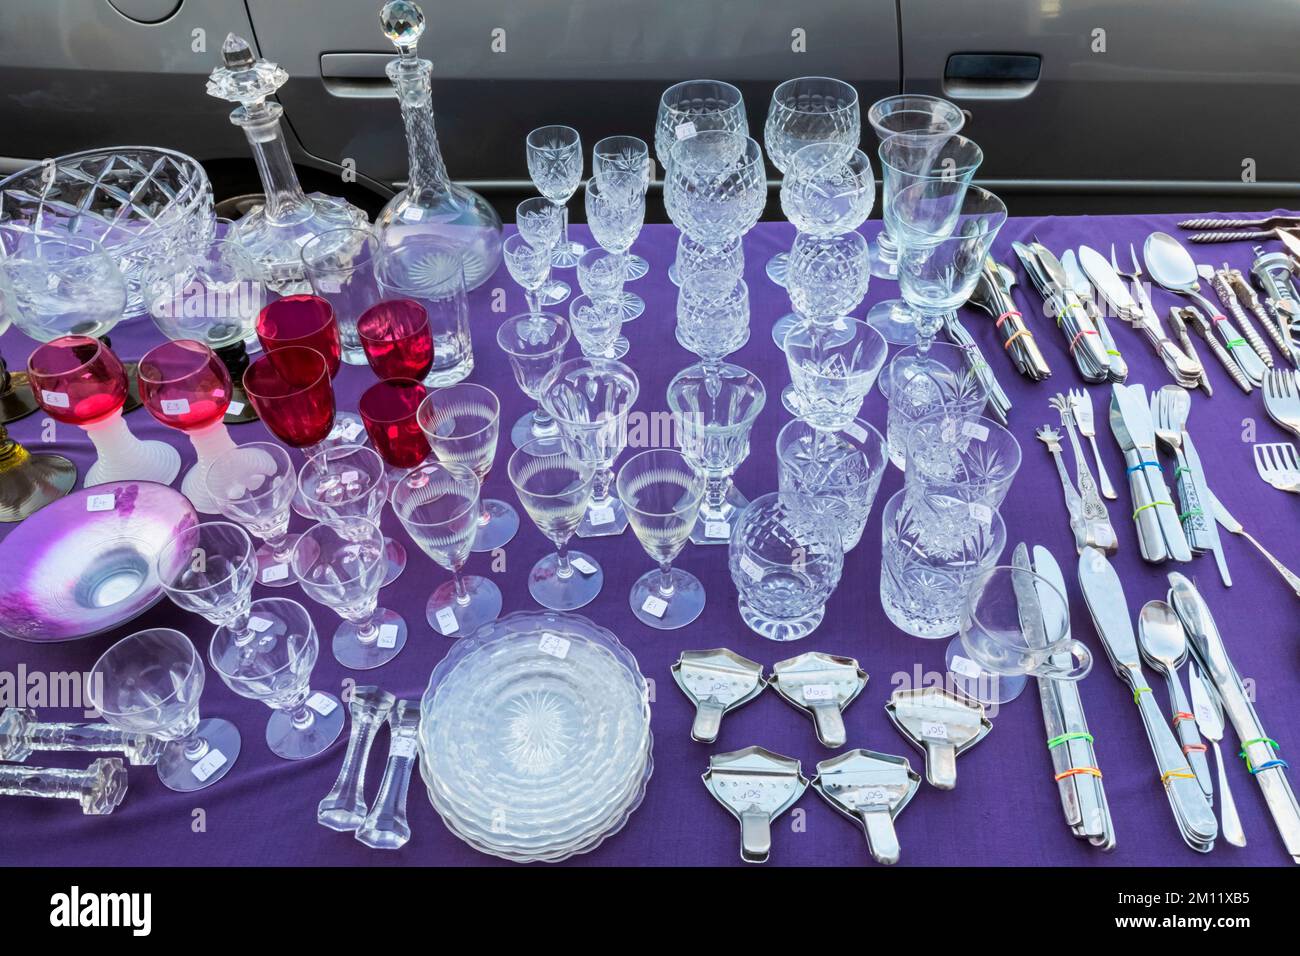 England, Dorset, Bridport, Bridport Market, Display of Antique Glasses and Tableware Stock Photo